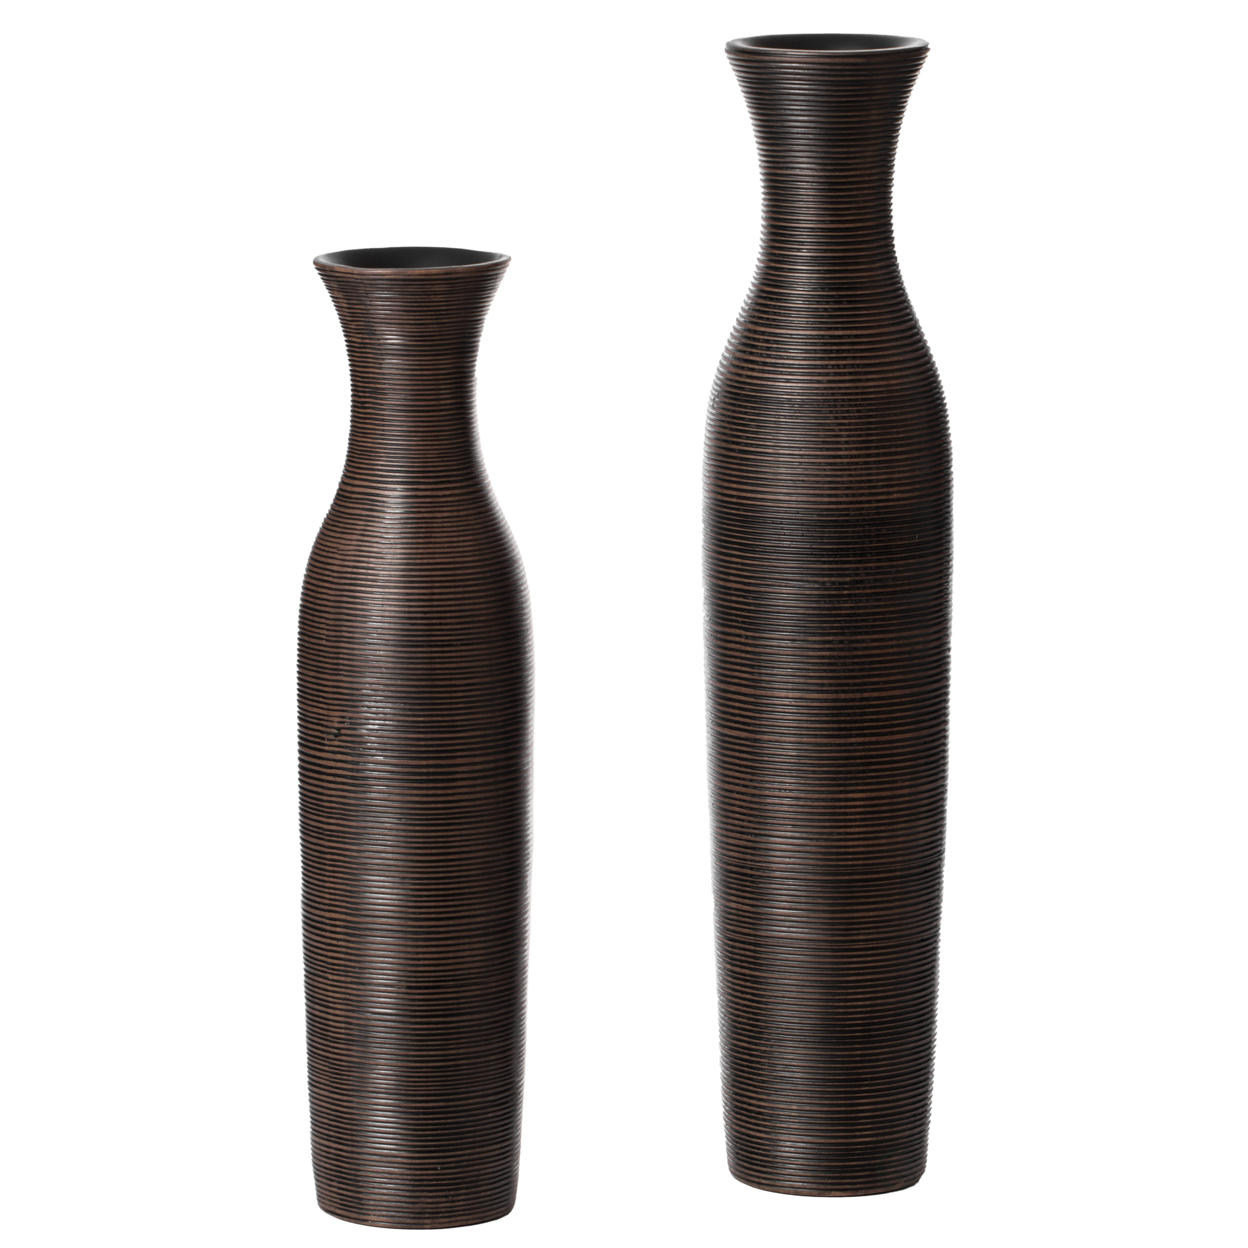 Tall Decorative Modern Ripped Trumpet Design Floor Vase, Brown - Set Of 2